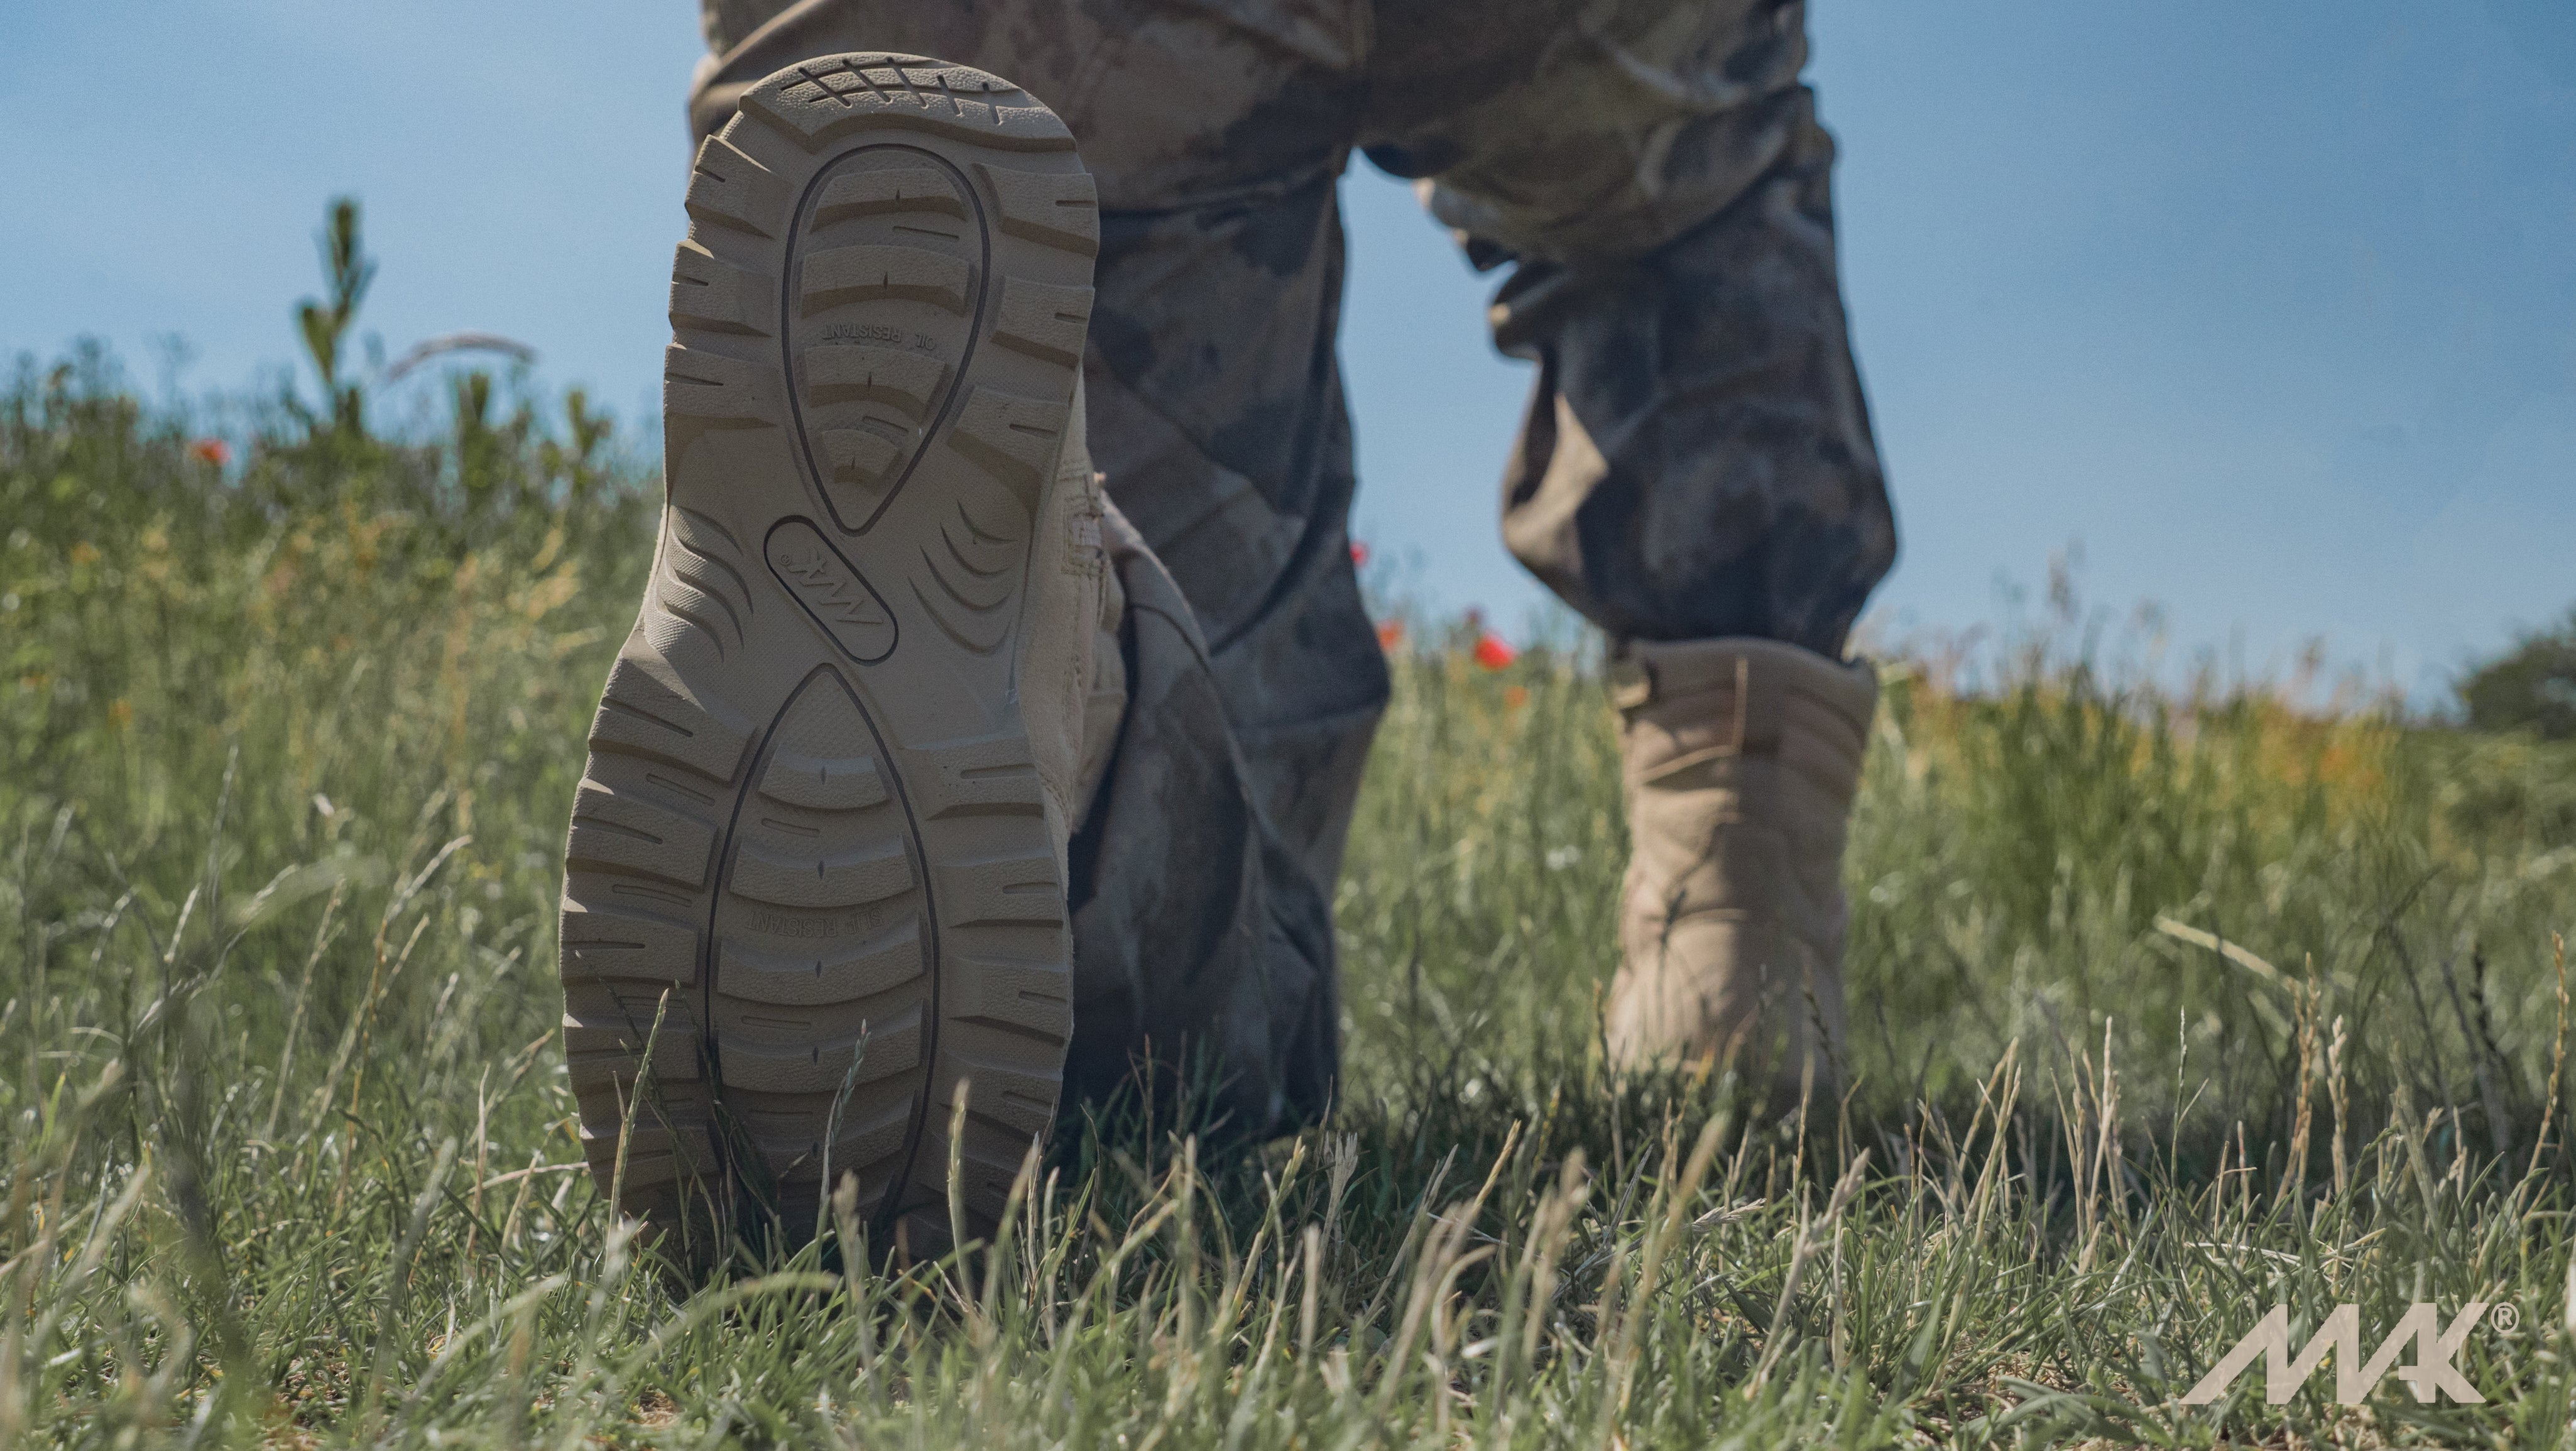 kneeling in the grass wearing the mak desert tan 9" protector tactical boot